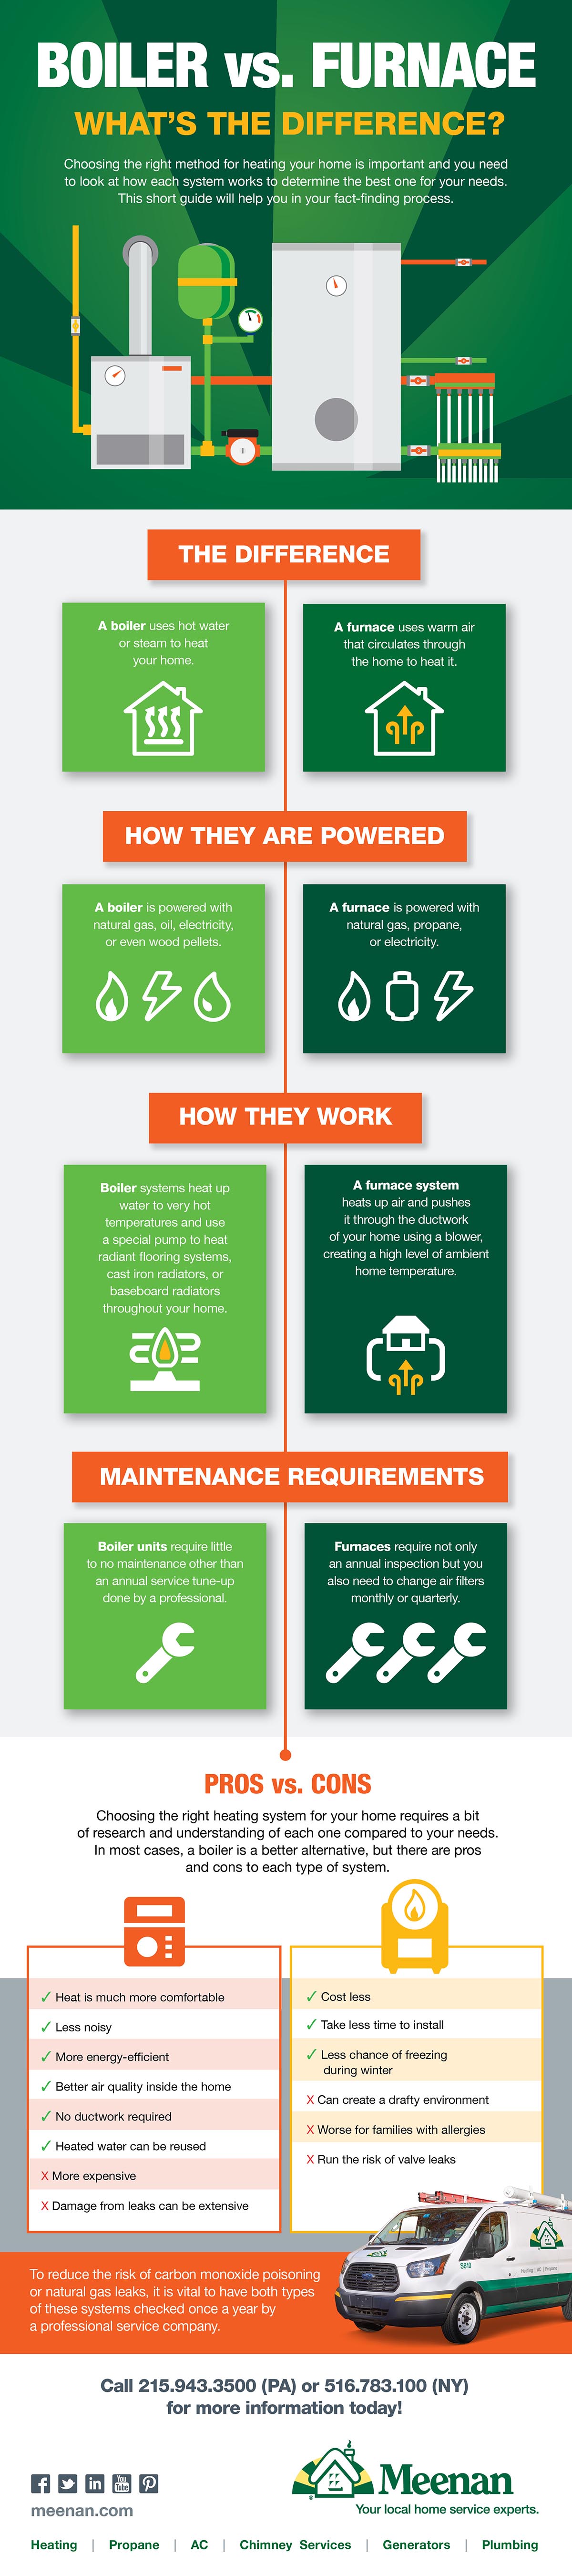 Boiler versus Furnace infographic